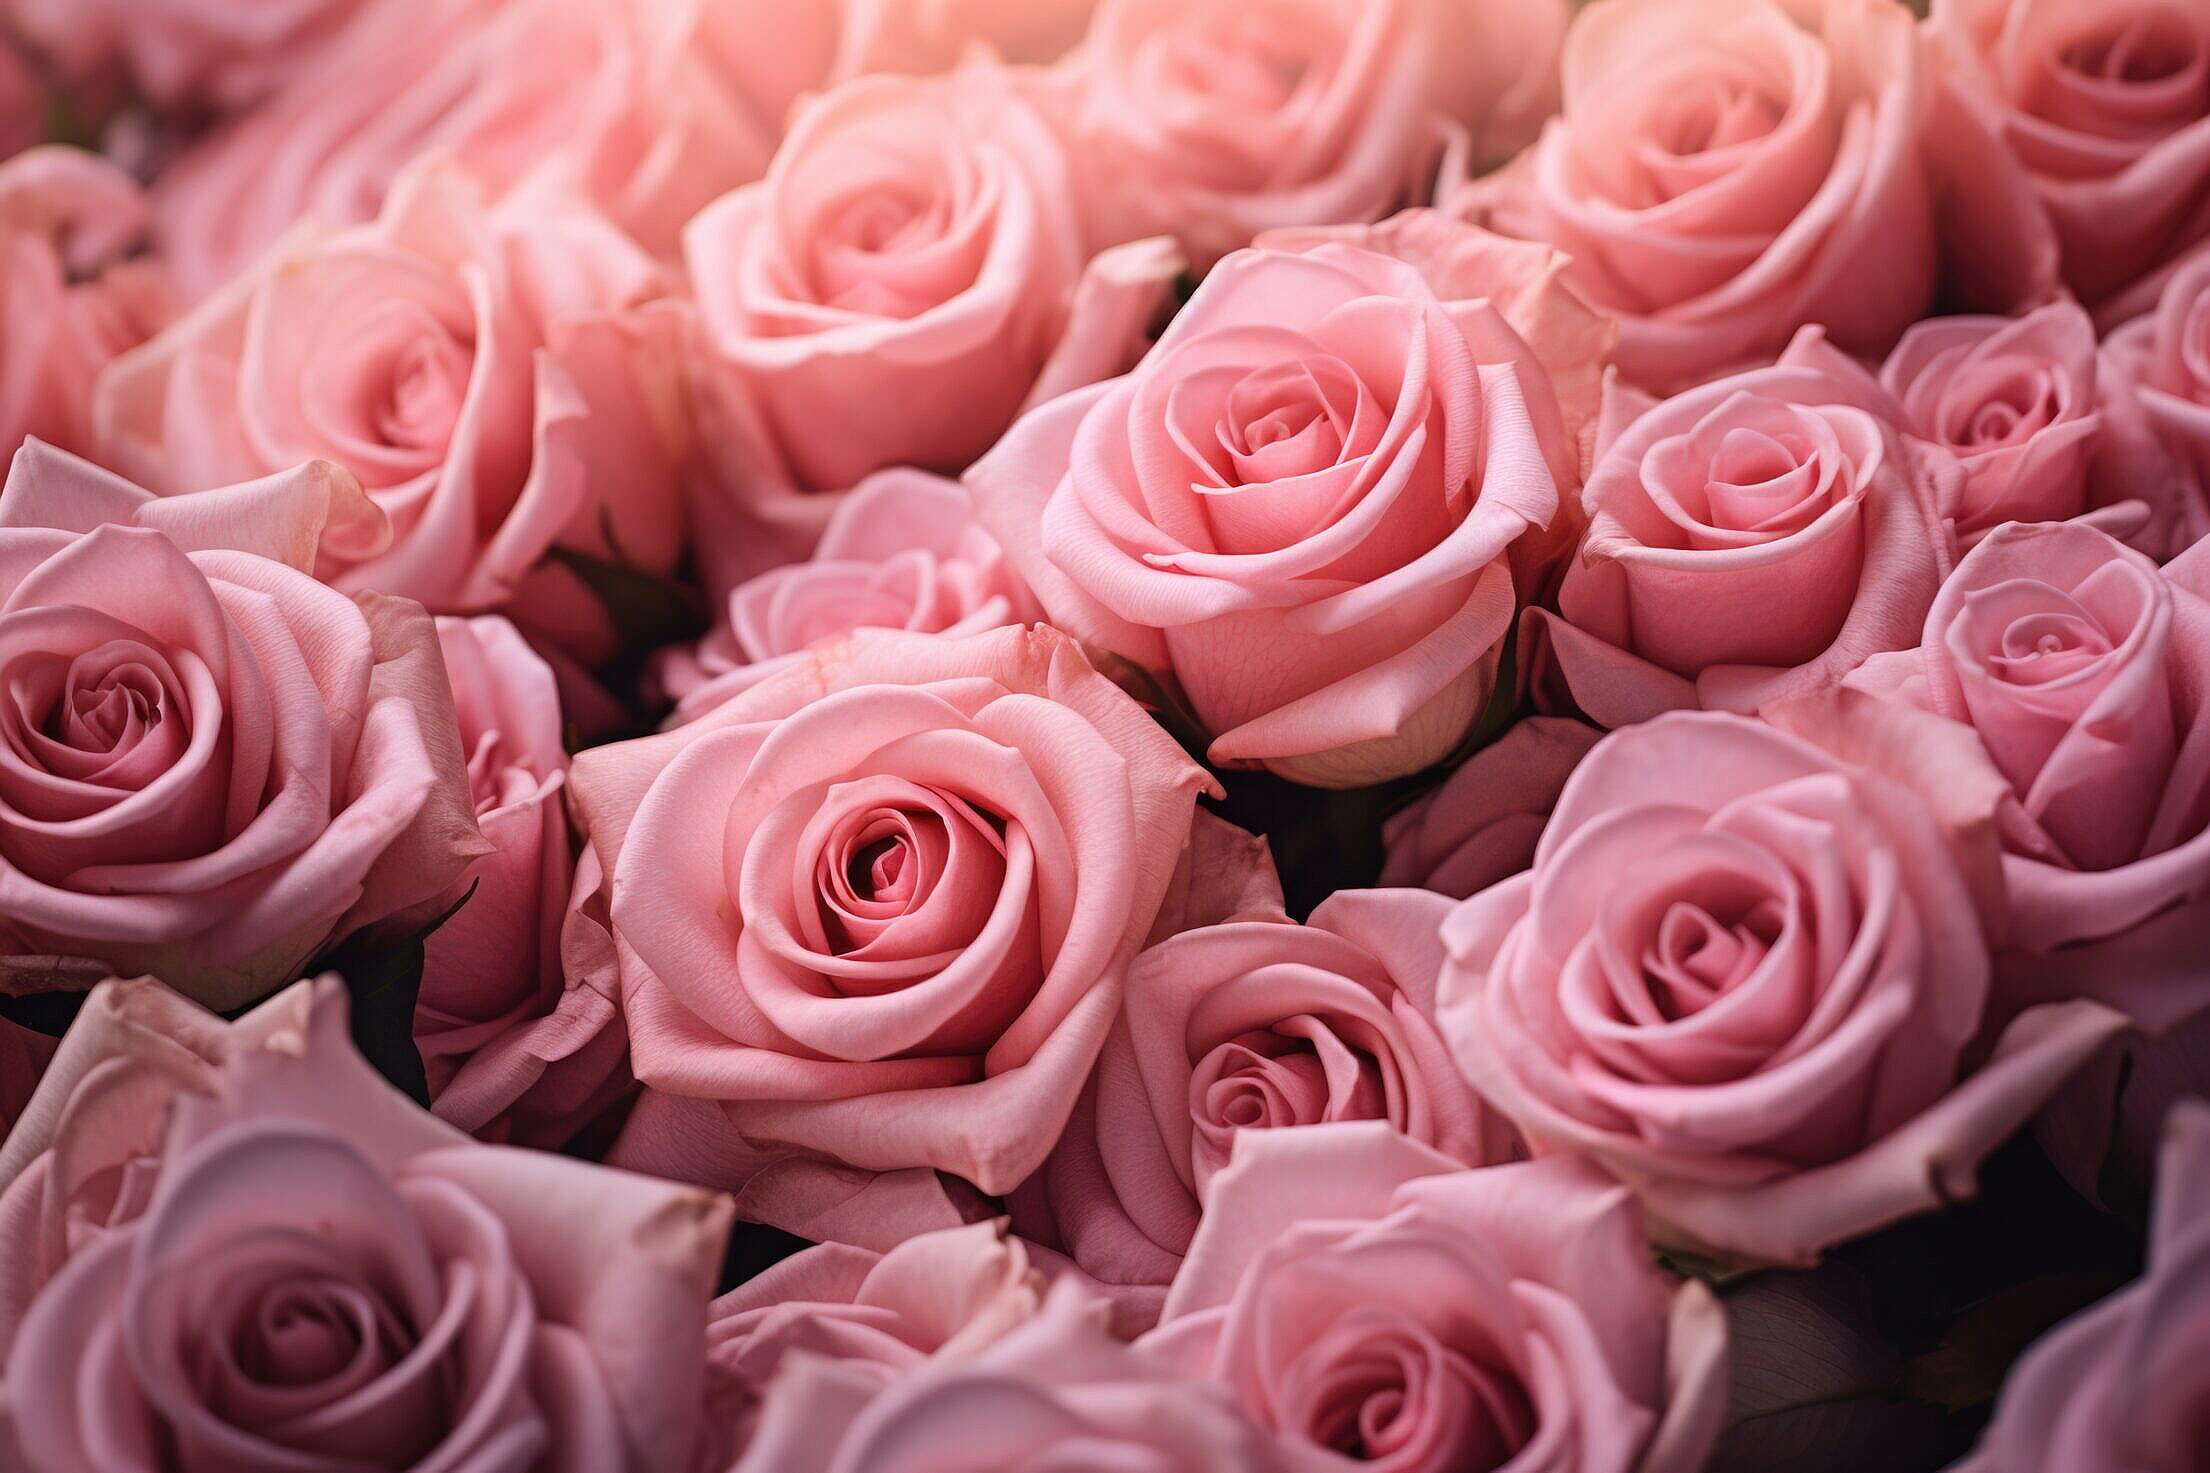 Pink Roses Bouquet Close-Up Free Stock Photo | picjumbo